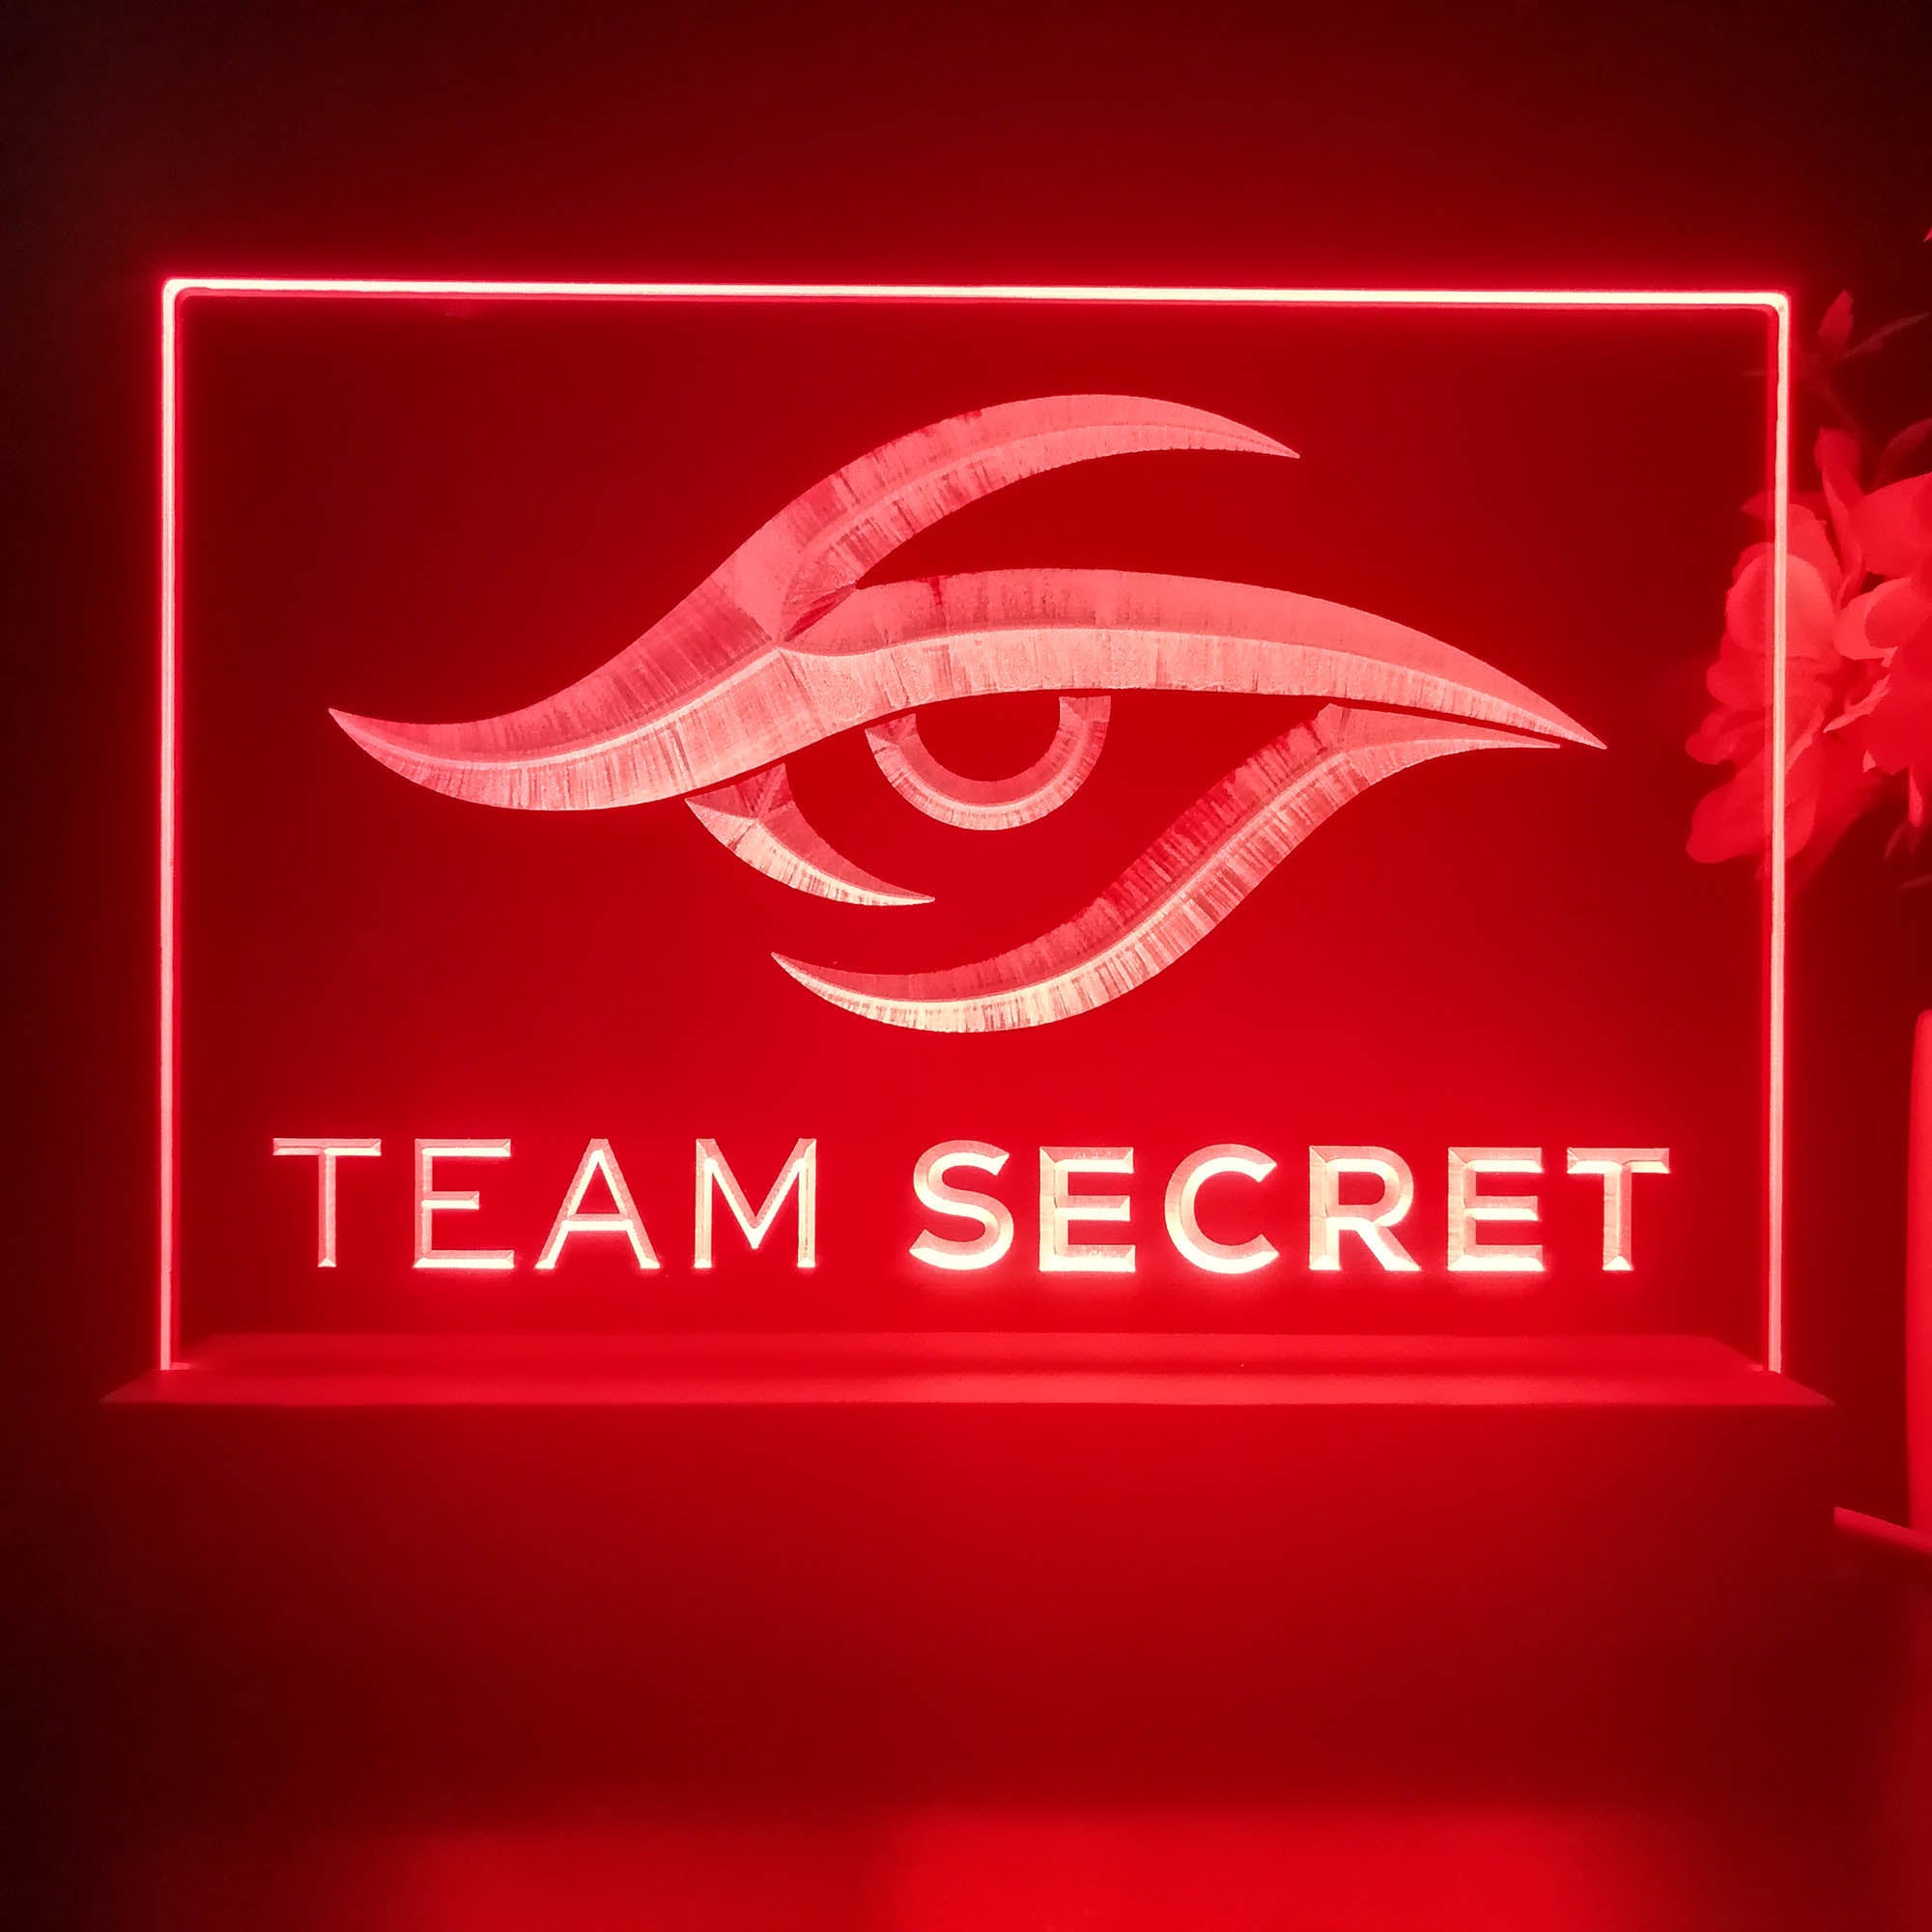 Team Secret 3D Illusion Night Light Desk Lamp